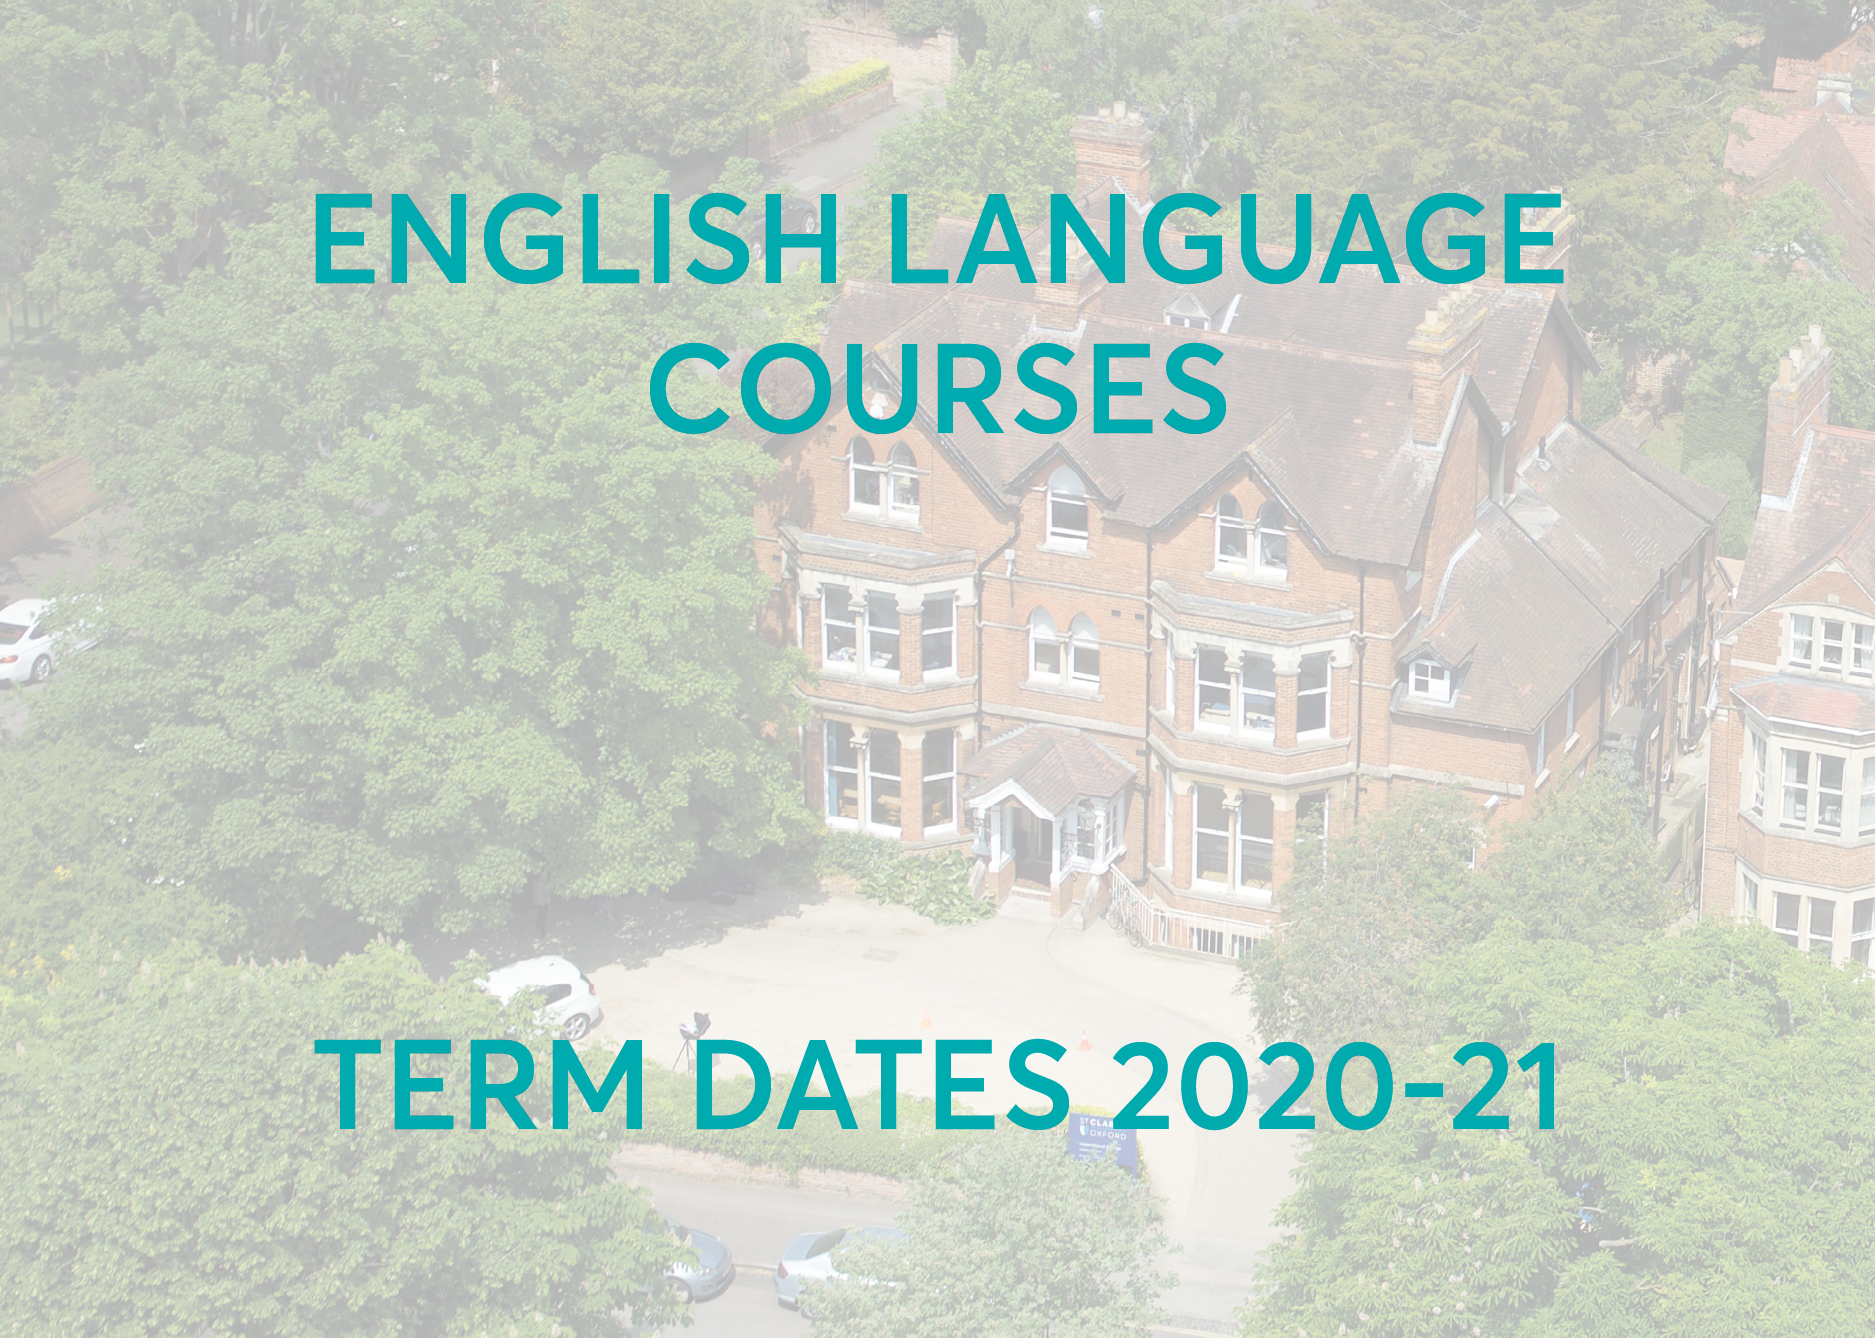 English language courses term dates